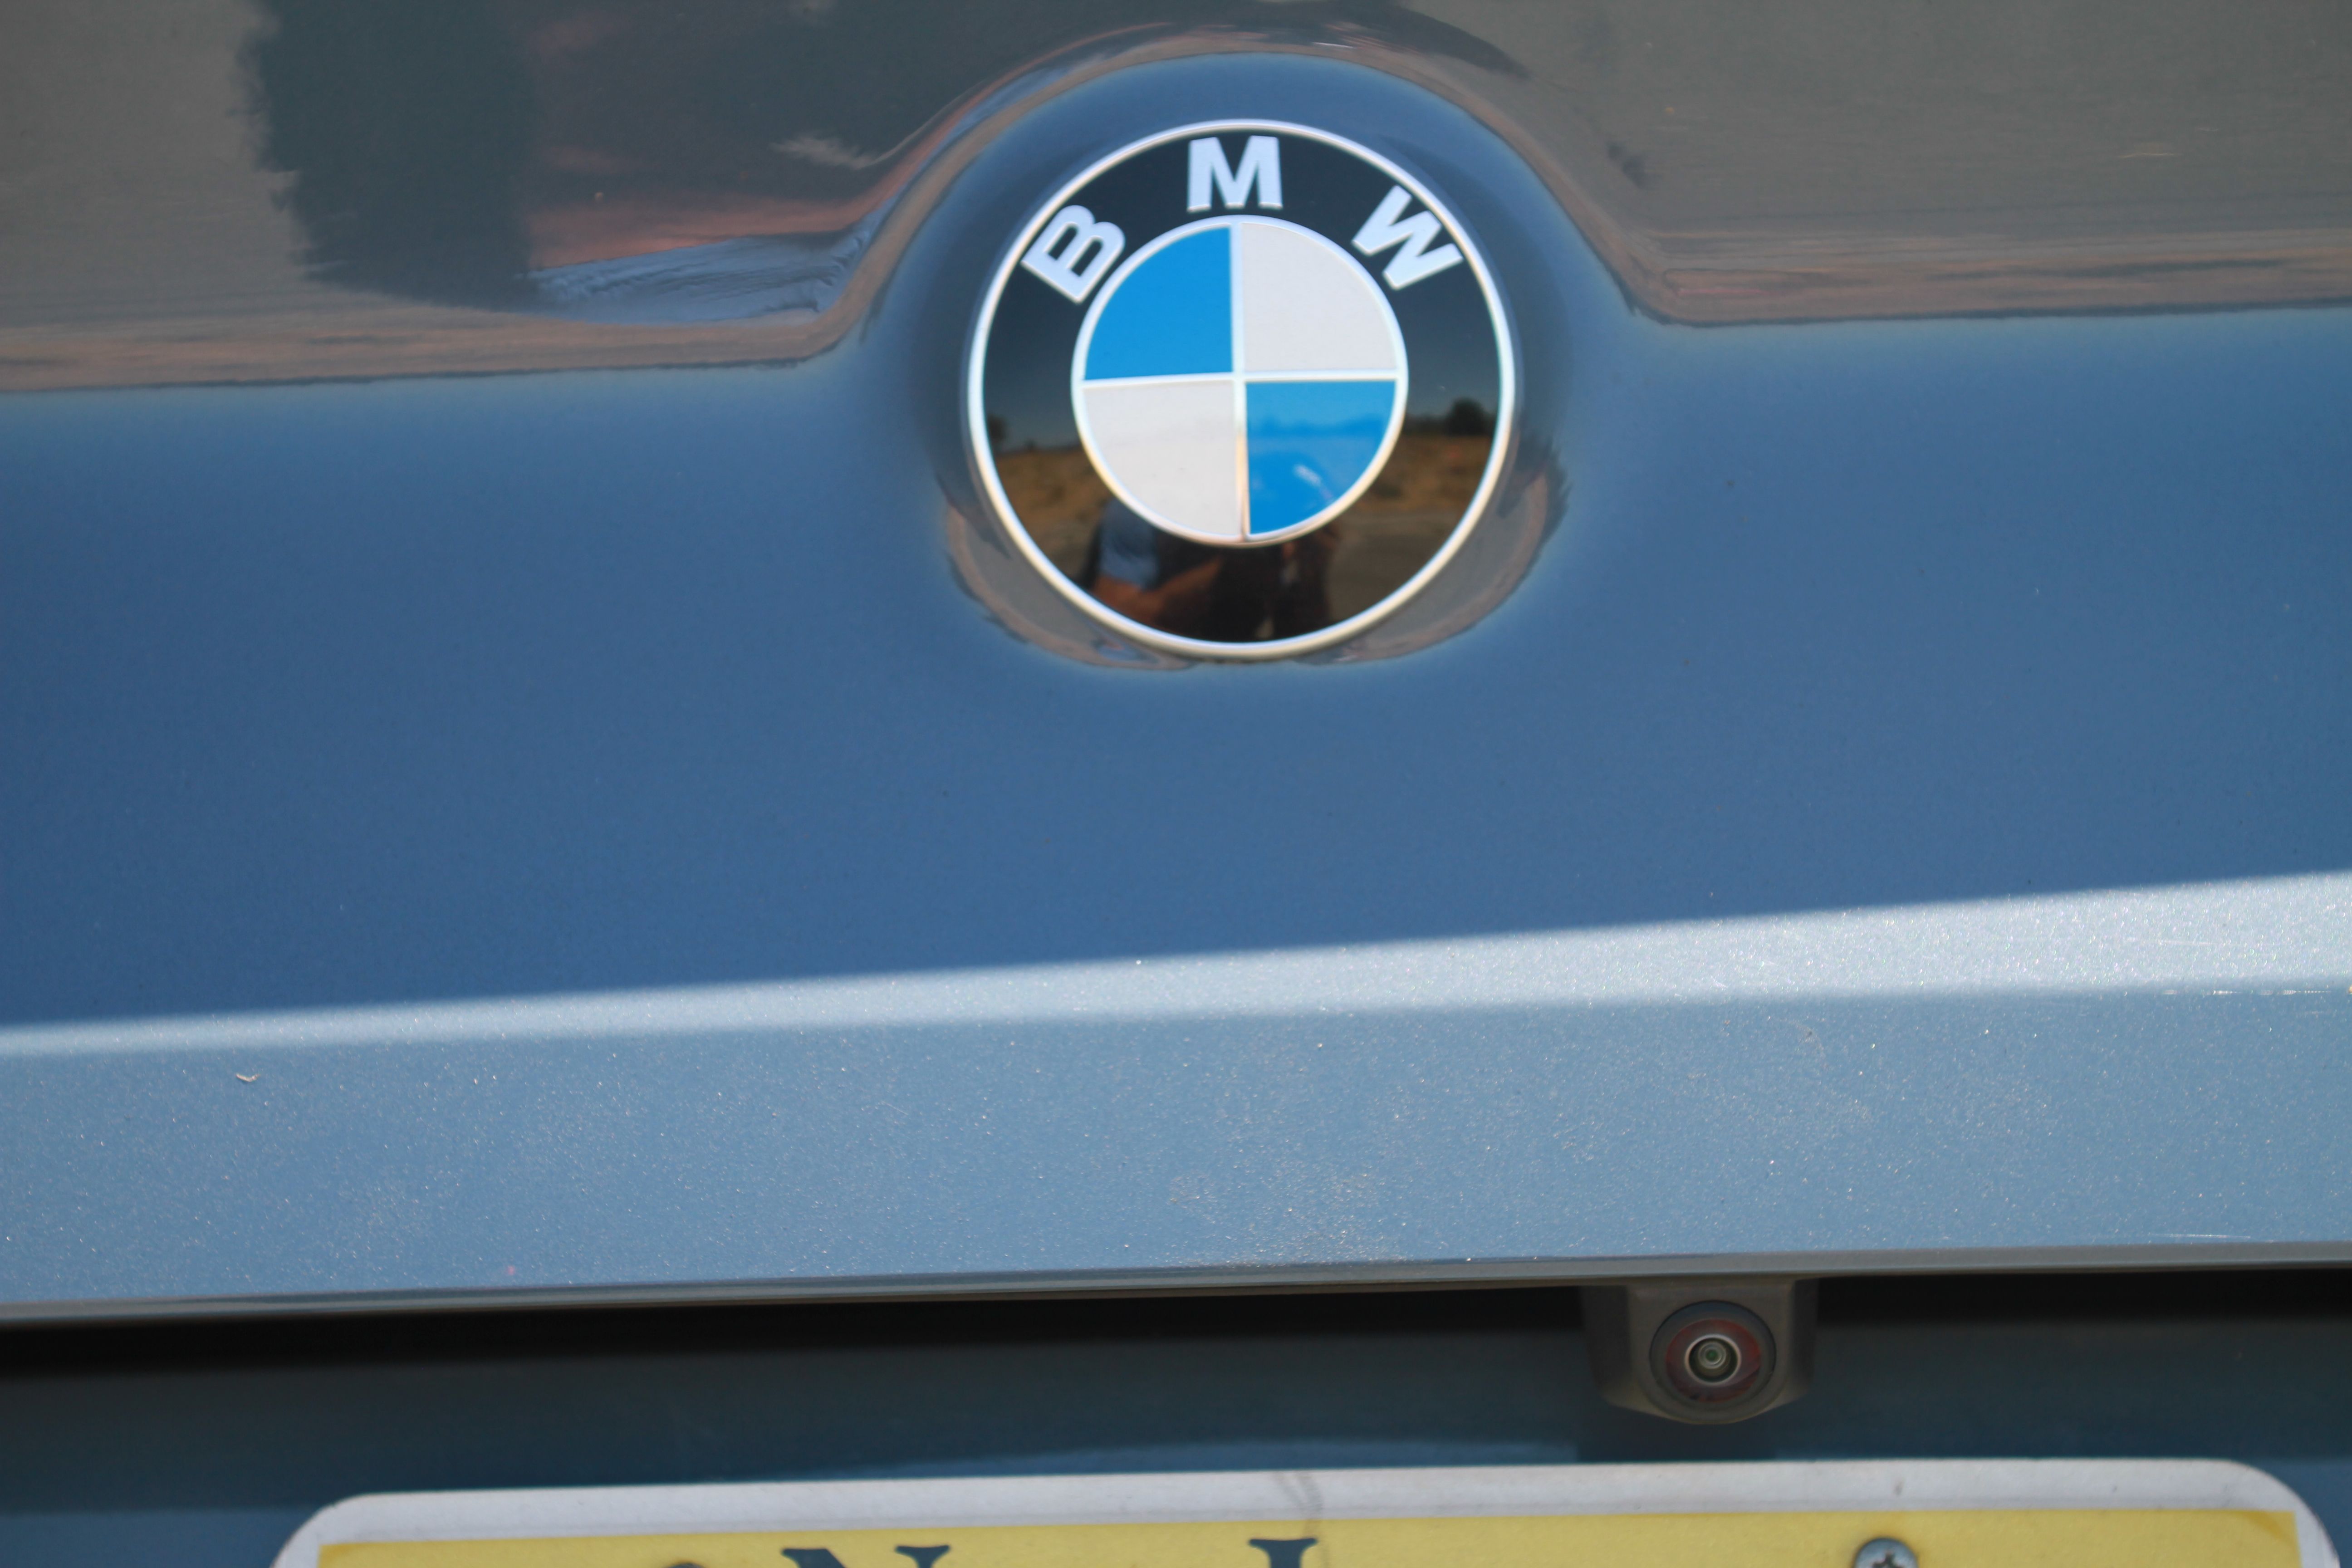 2020 BMW M850i - Driven